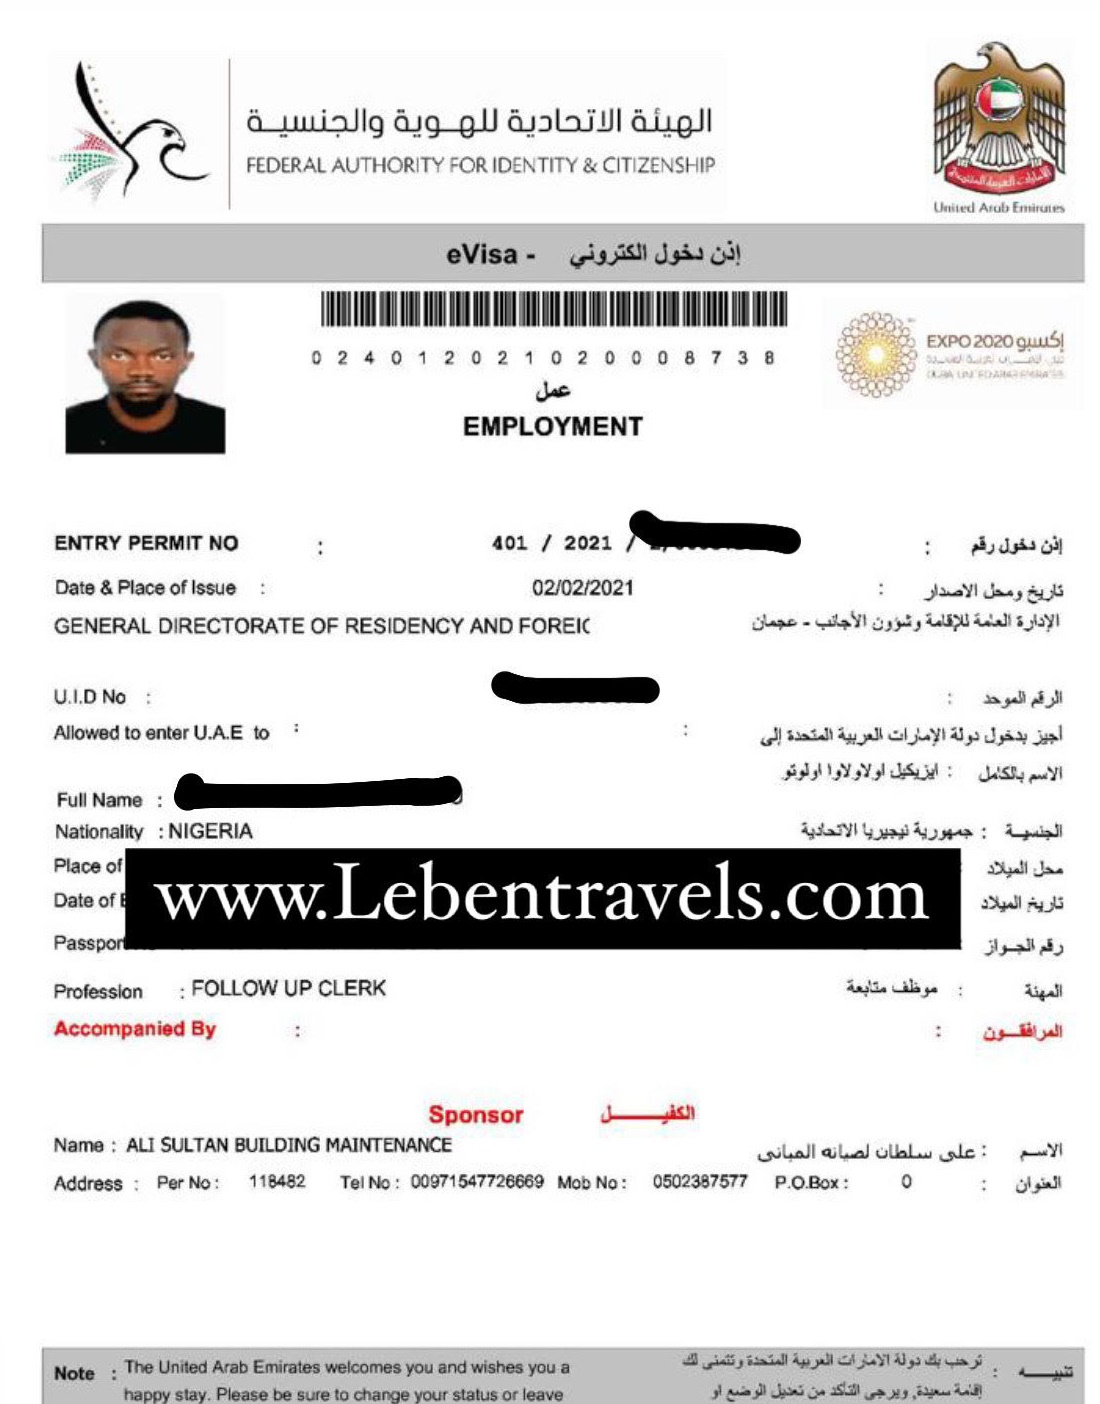 DUBAI UAE EMPLOYMENT - 2 YEARS DIRECT EMPLOYMENT